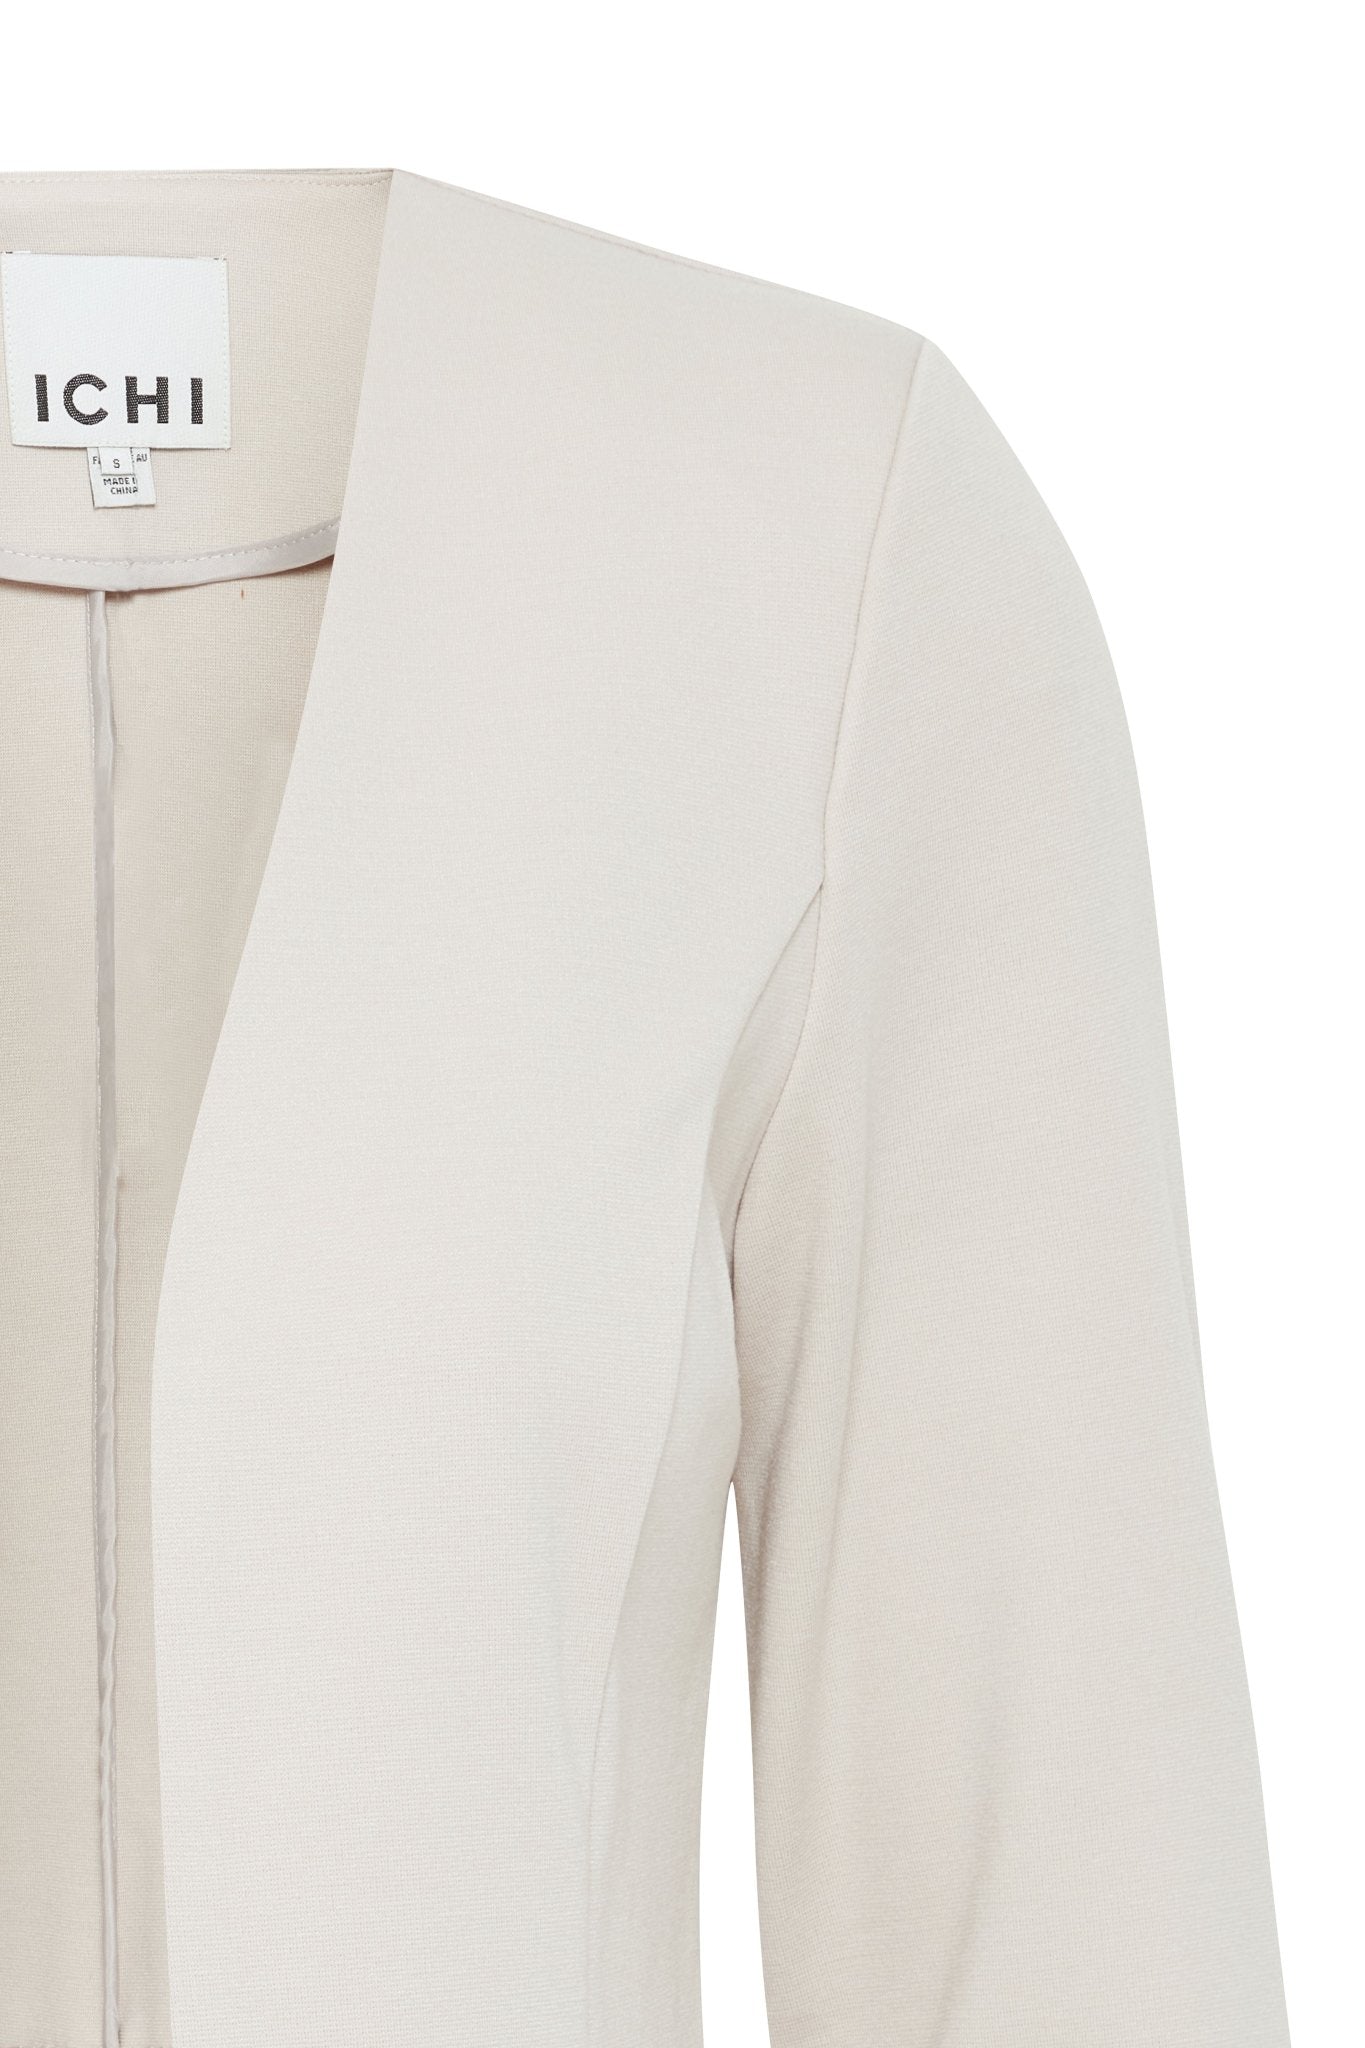 Kate short blazer by Ichi - Silver gray - Blue Sky Fashions & Lingerie